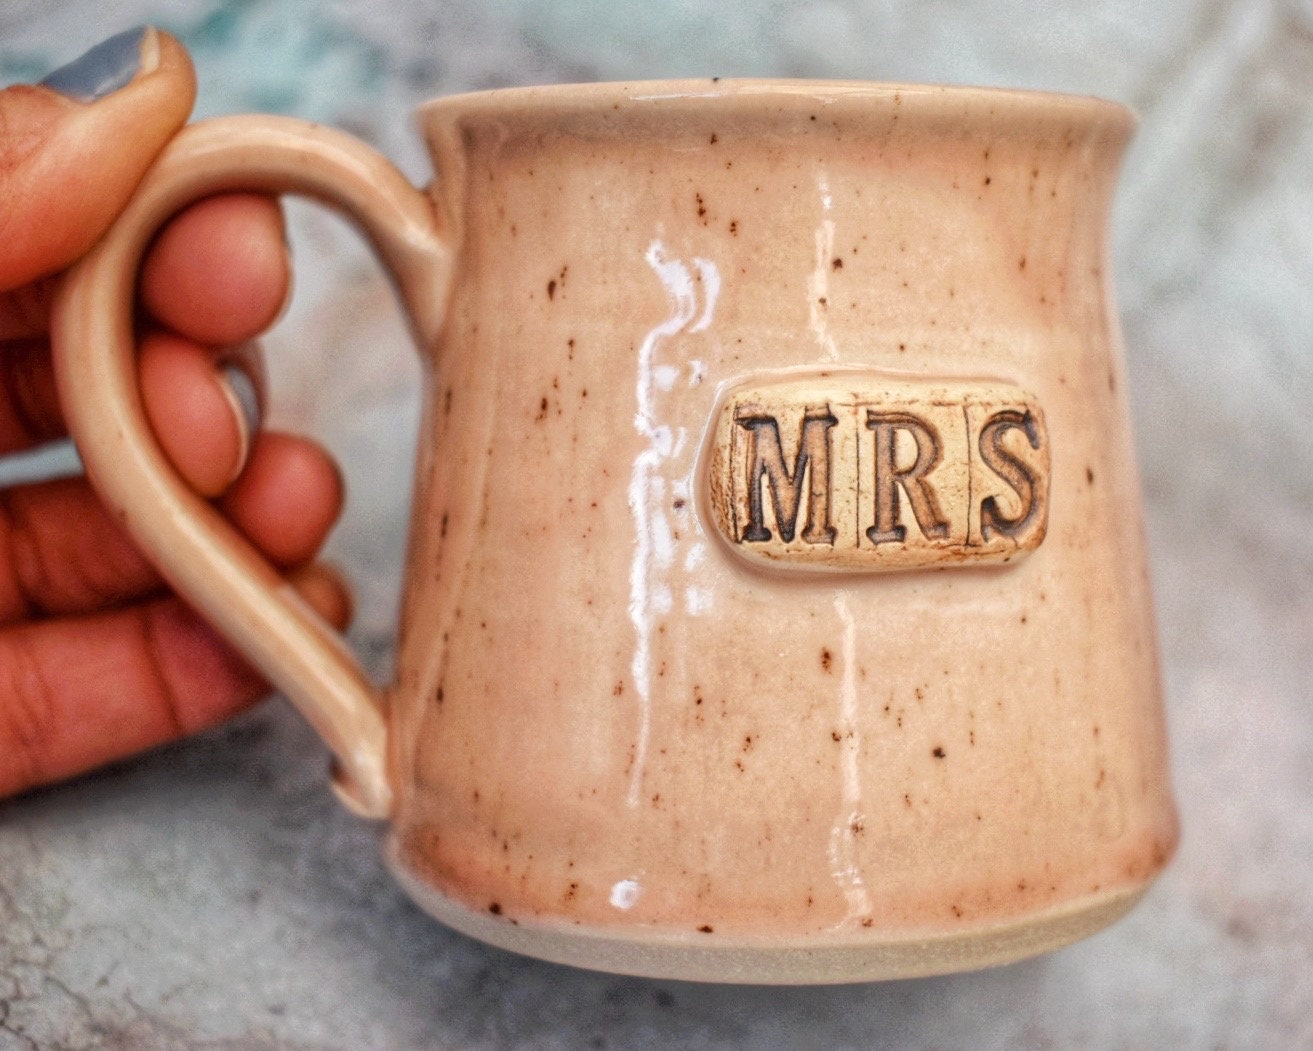 Handmade ‘MRS’ Mug, speckled pale pink glaze, 300ml Unique Wedding Gift for her, coffee cup, tea mug, Ceramic, Stoneware, UK Studio Pottery